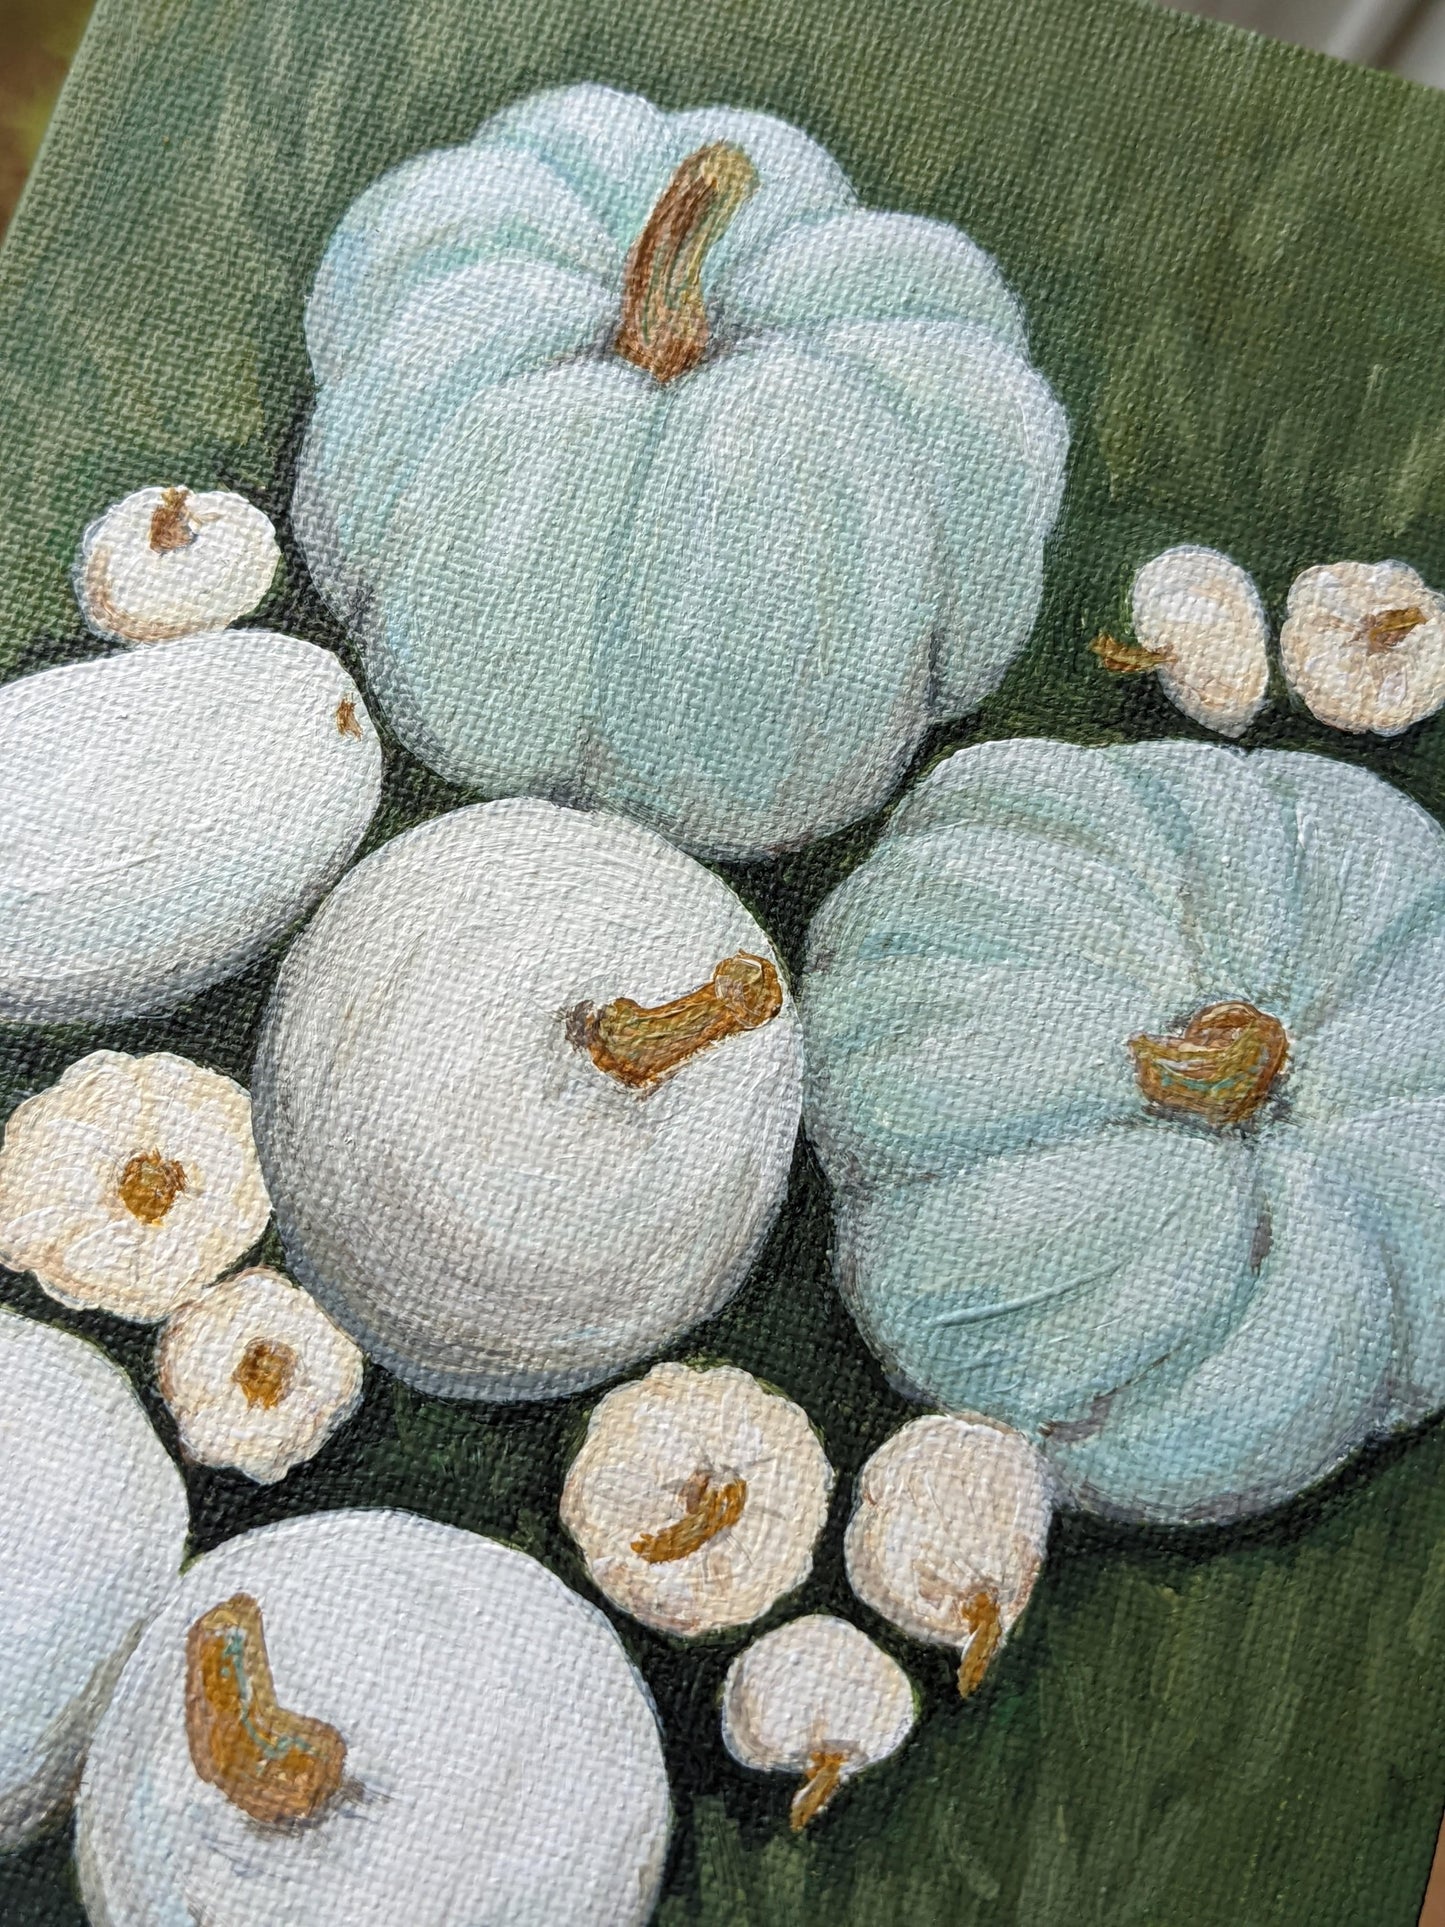 Fall Pumpkins | 5x7 original art